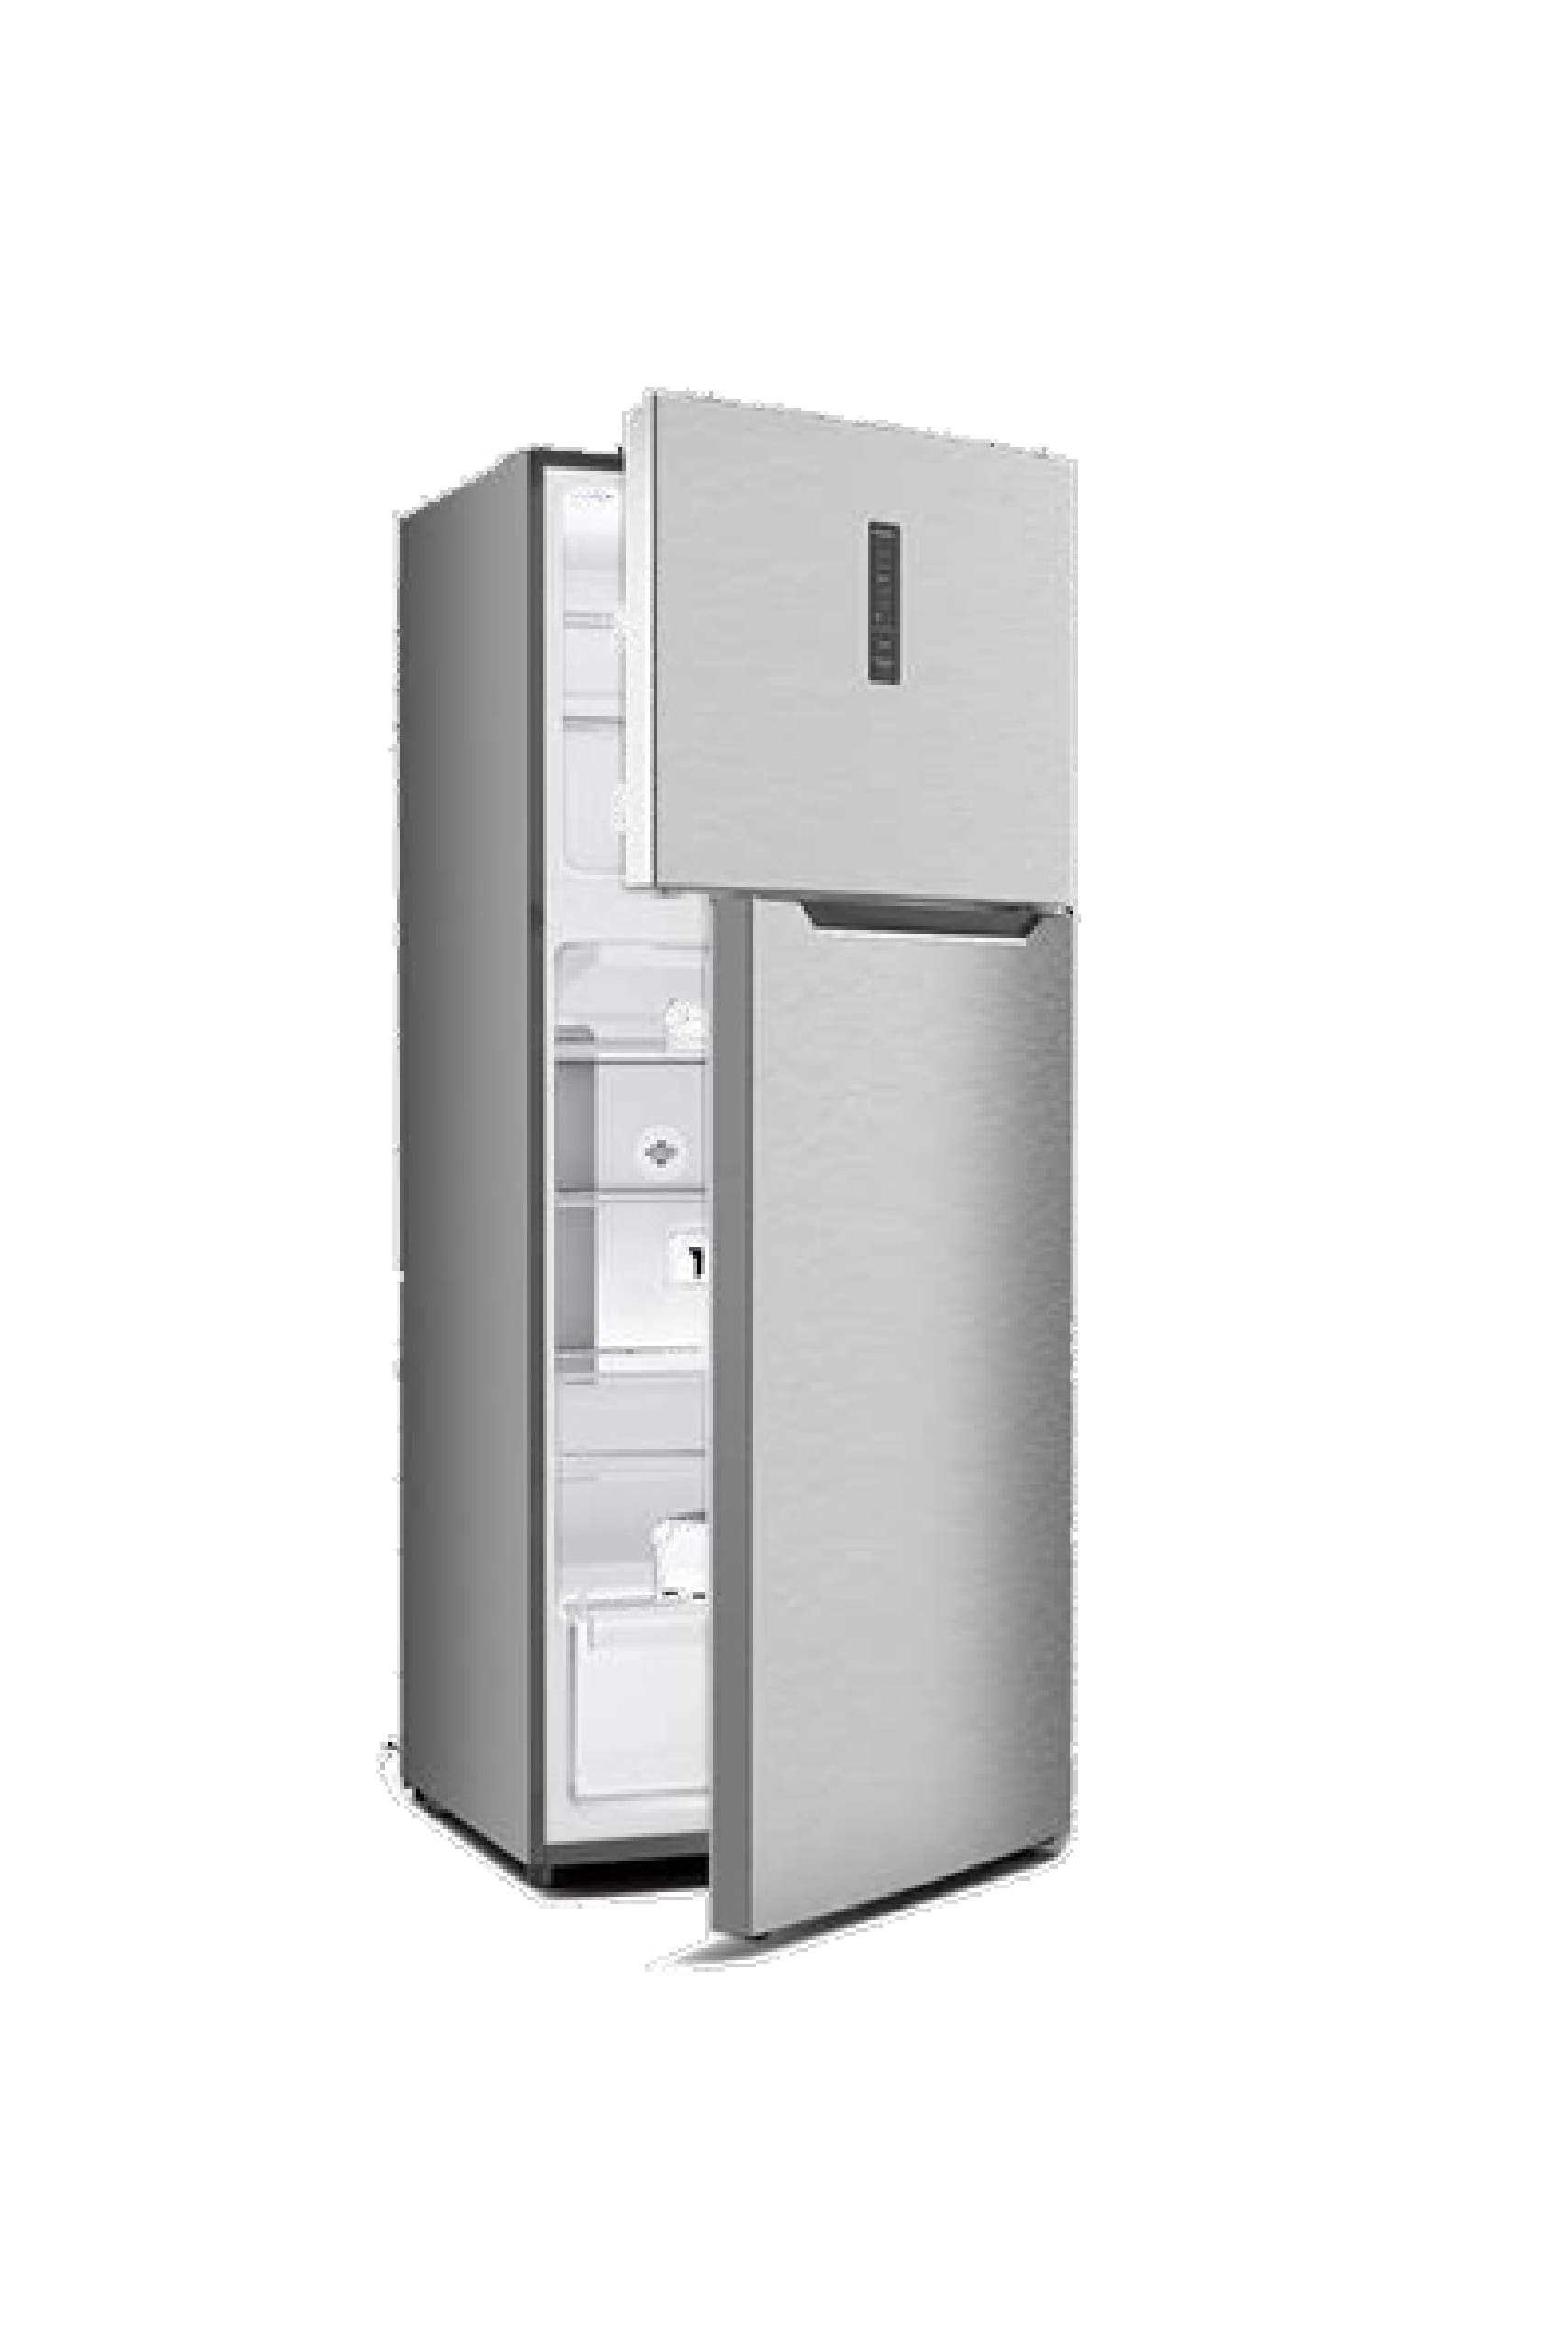 Sharp Refrigerator 512Liter A++ – Silver